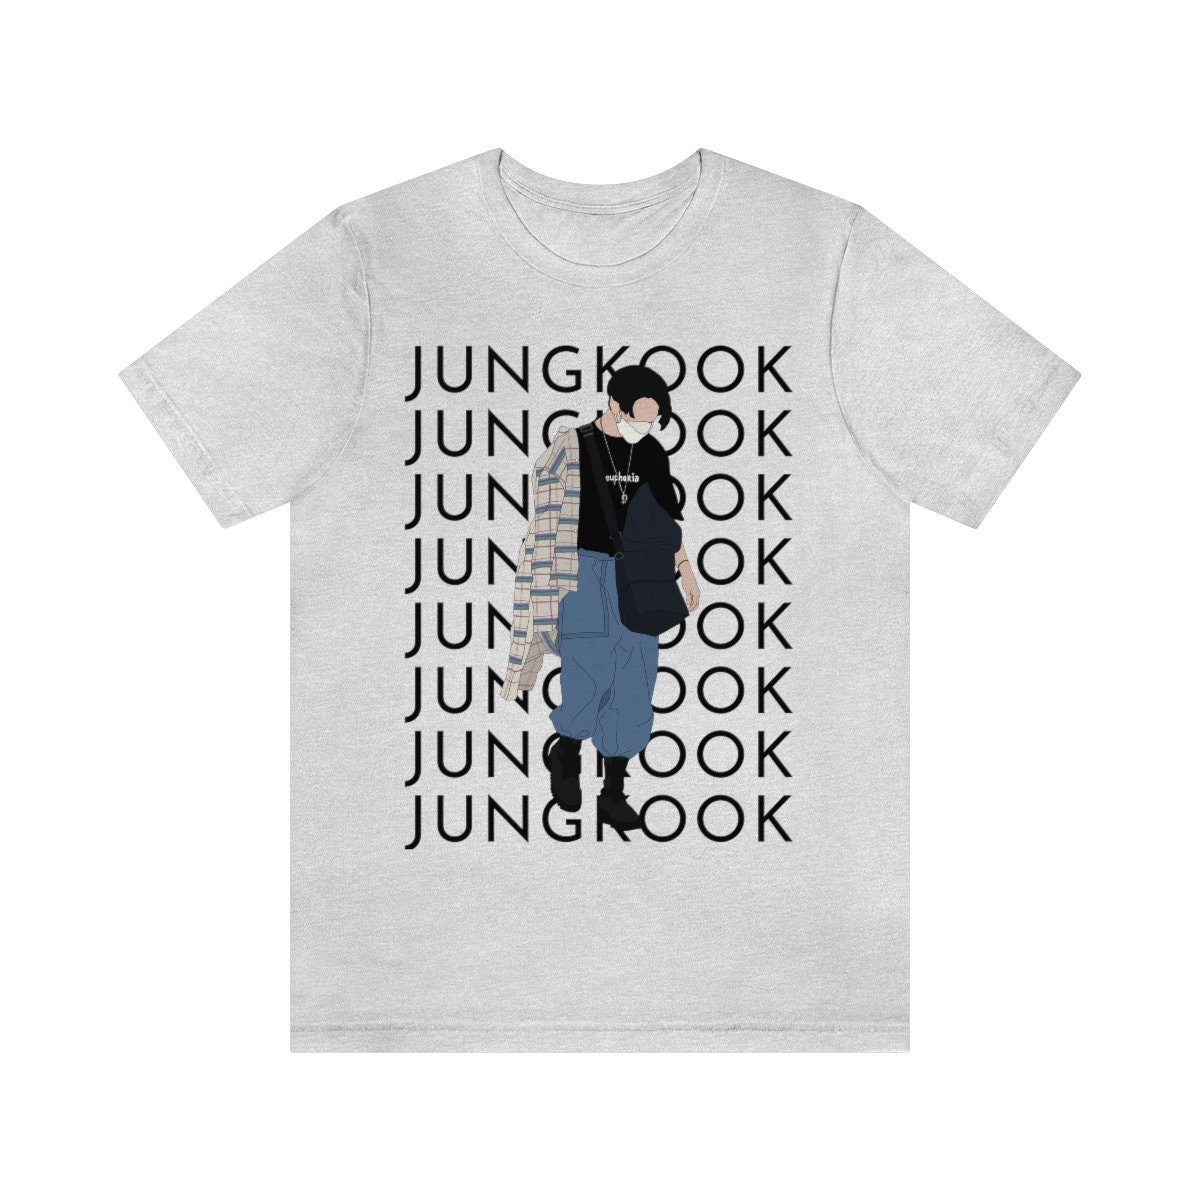 BTS Jungkook wearing a black suit - Wallpaper - K-POP STOCK